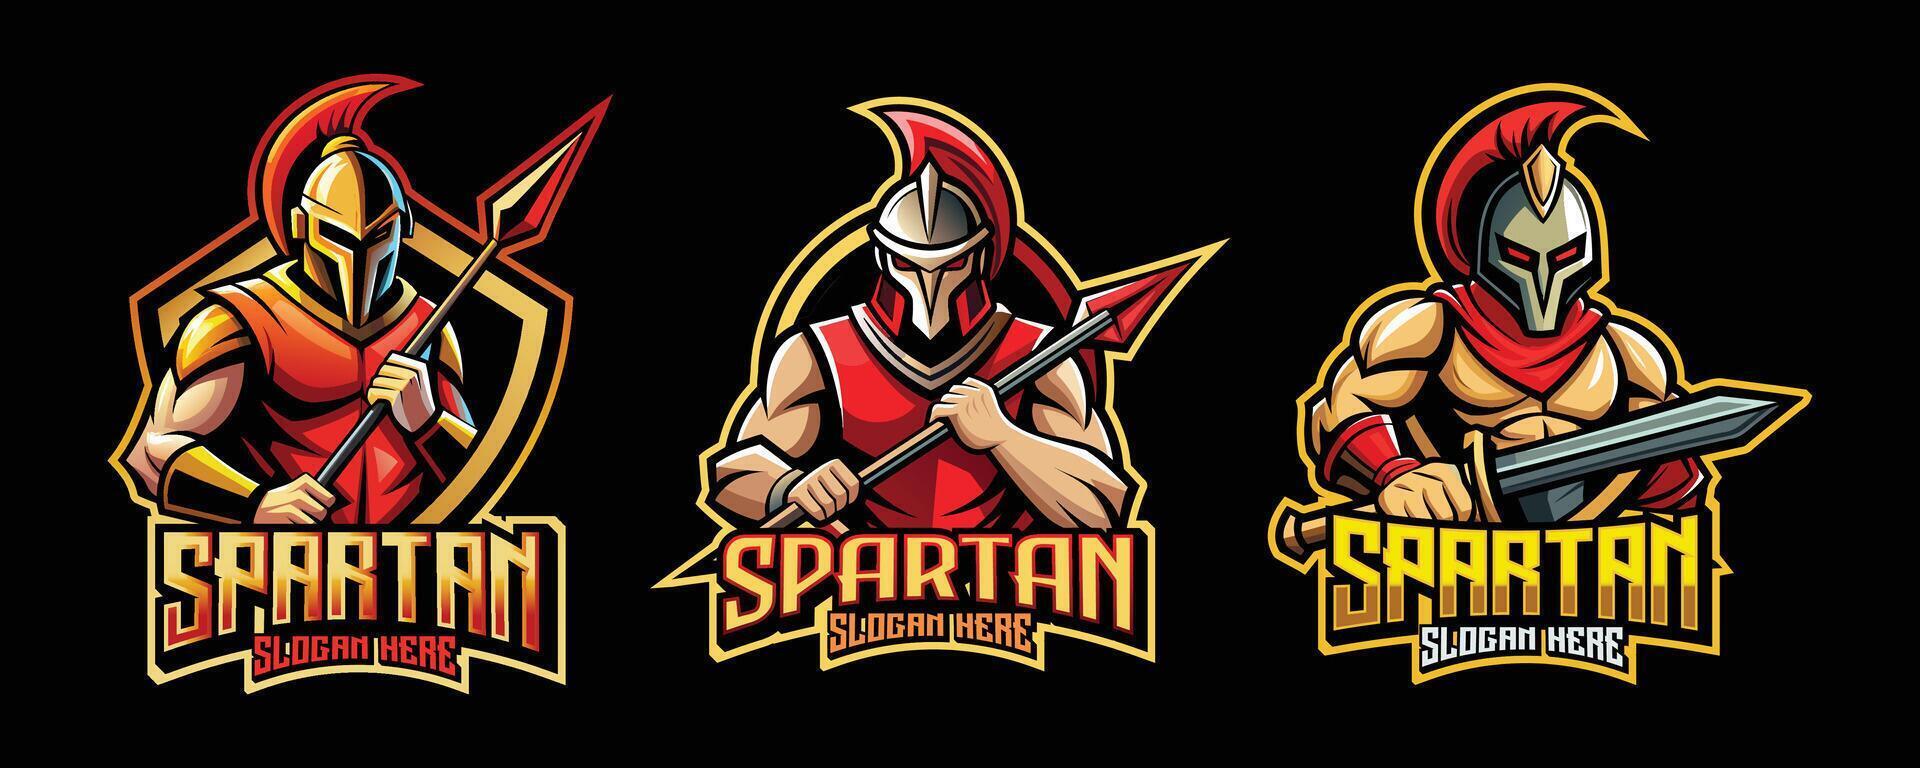 espartano esport jogos logotipo. conjunto do espartano Guerreiro mascote Projeto vetor